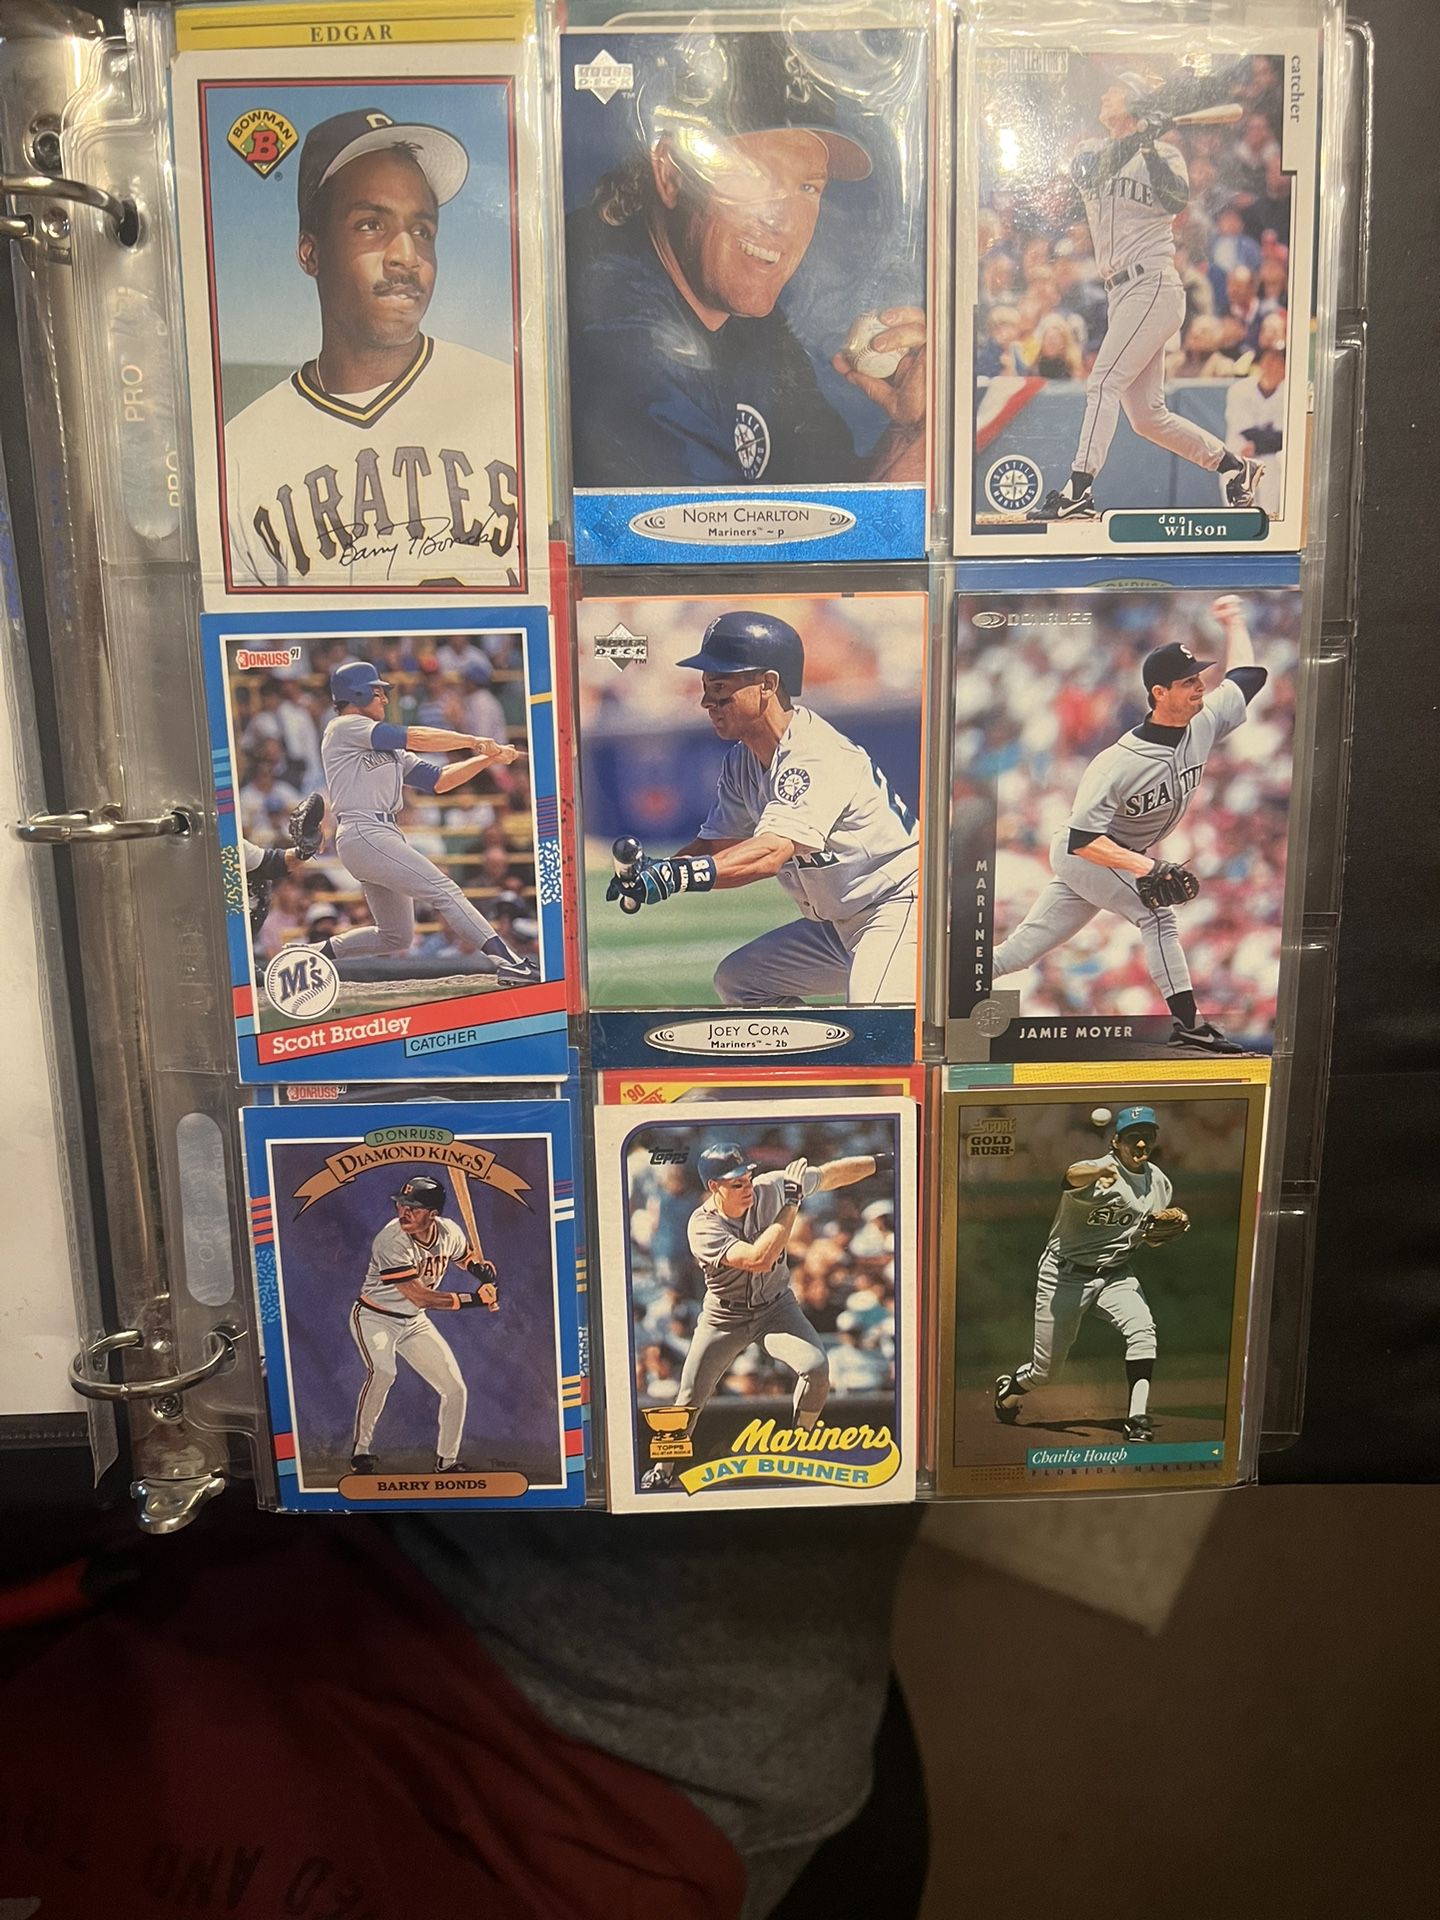 Vintage Baseball Card Lot 